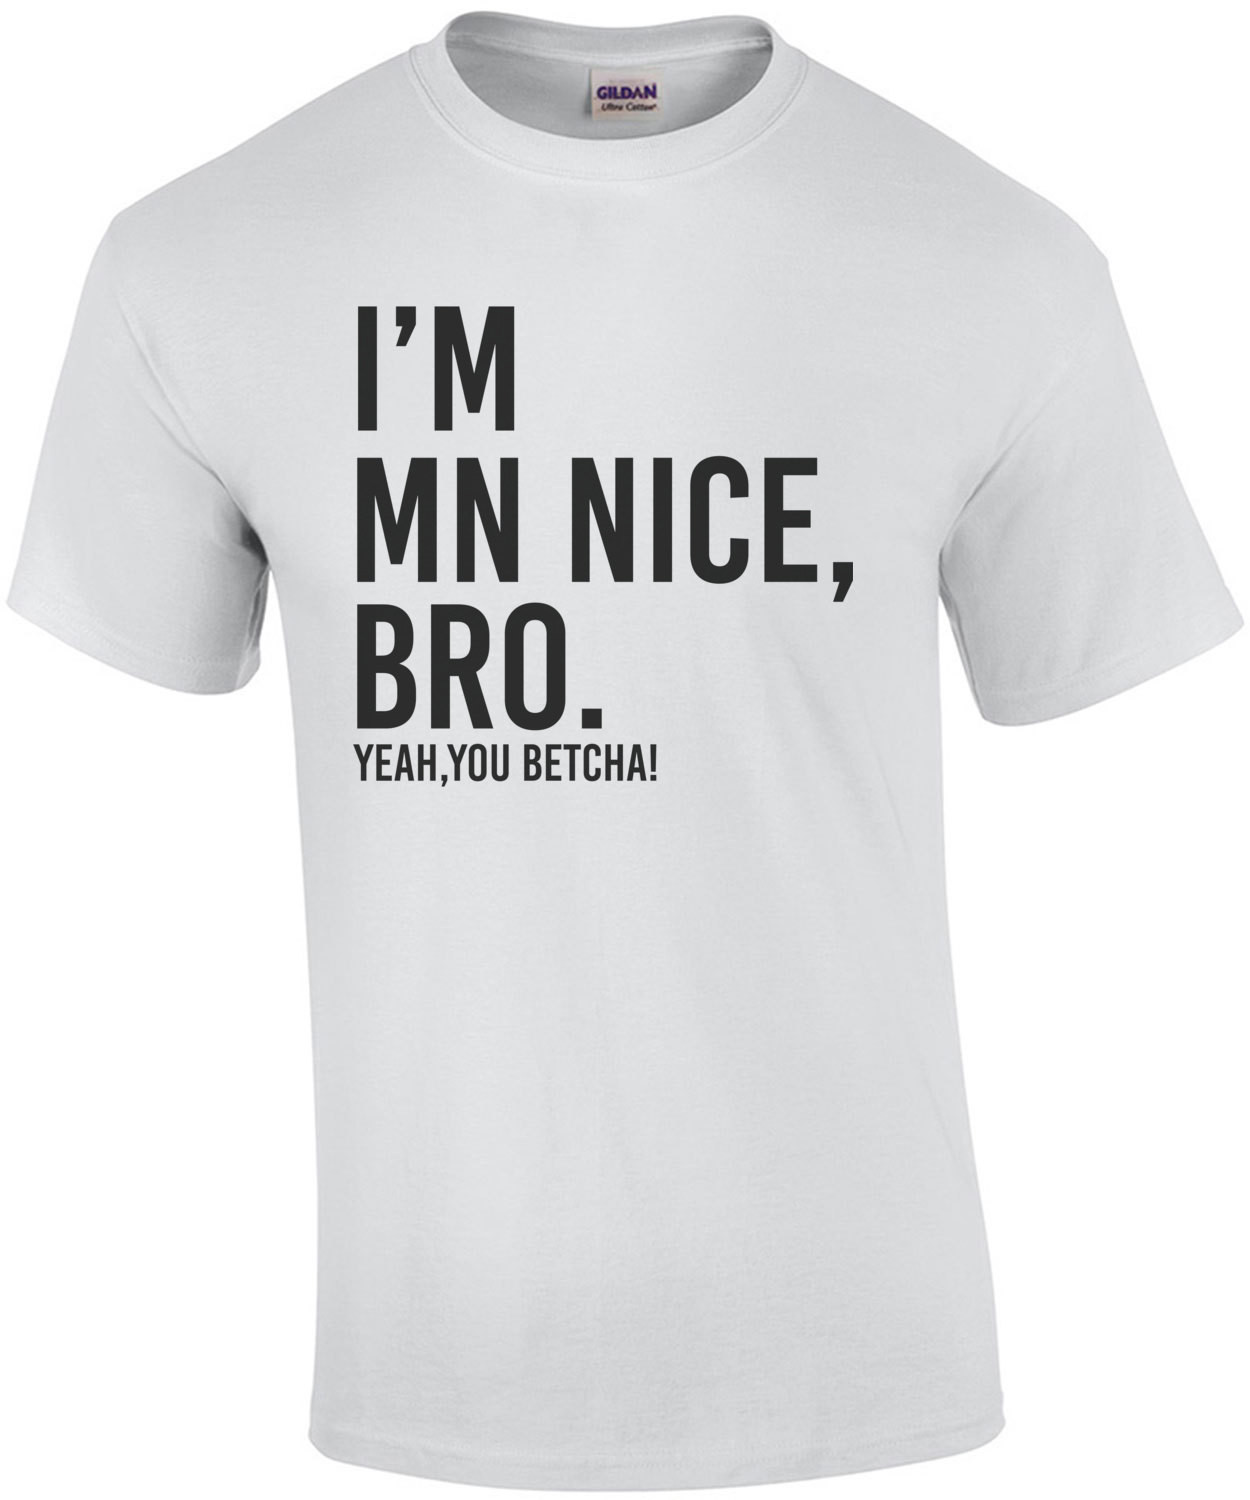 I'm MN Nice, bro. Yeah, you betcha! - Minnesota